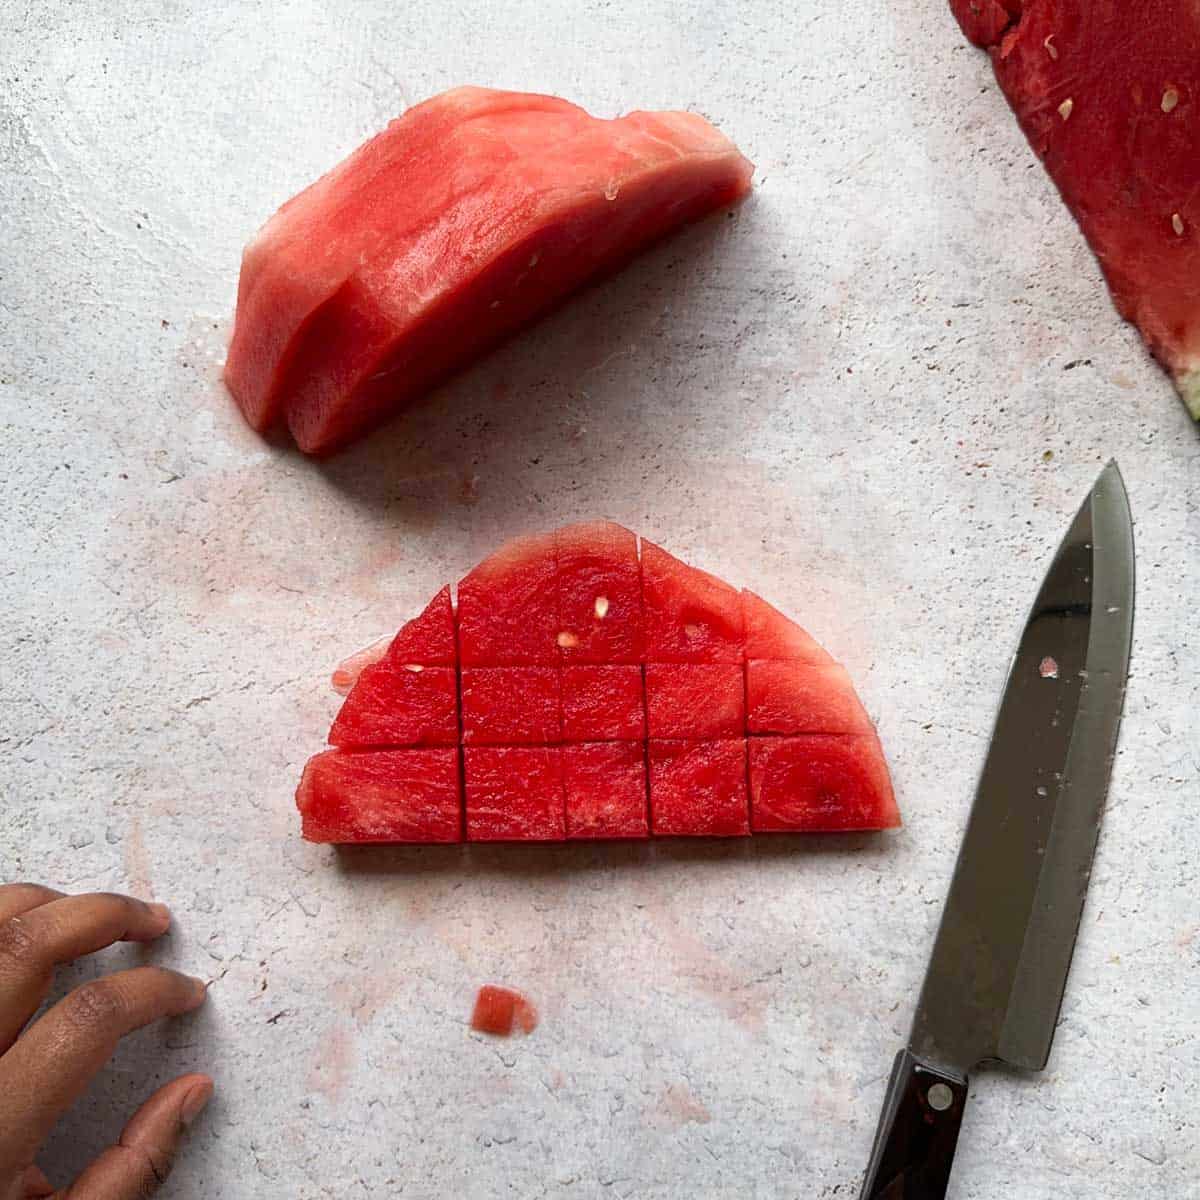 A watermelon cut into cubes